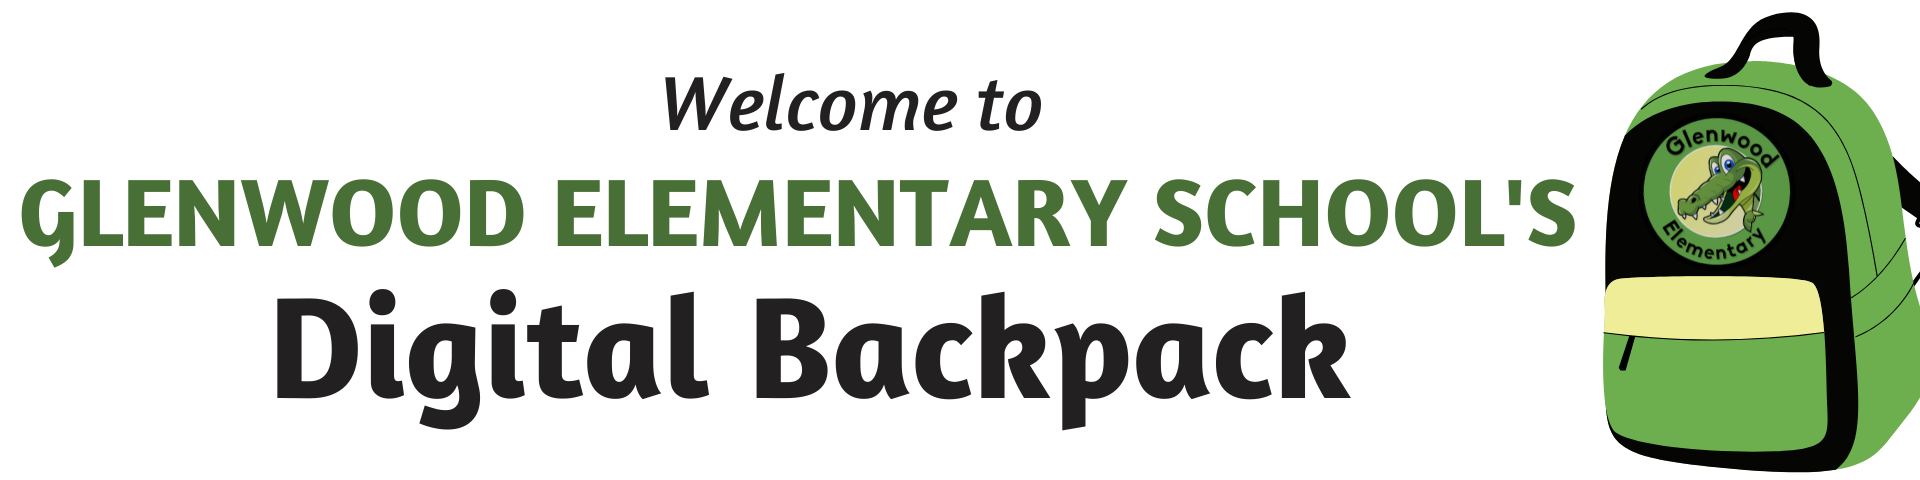 Welcome to Glenwood Elementary School's Digital Backpack